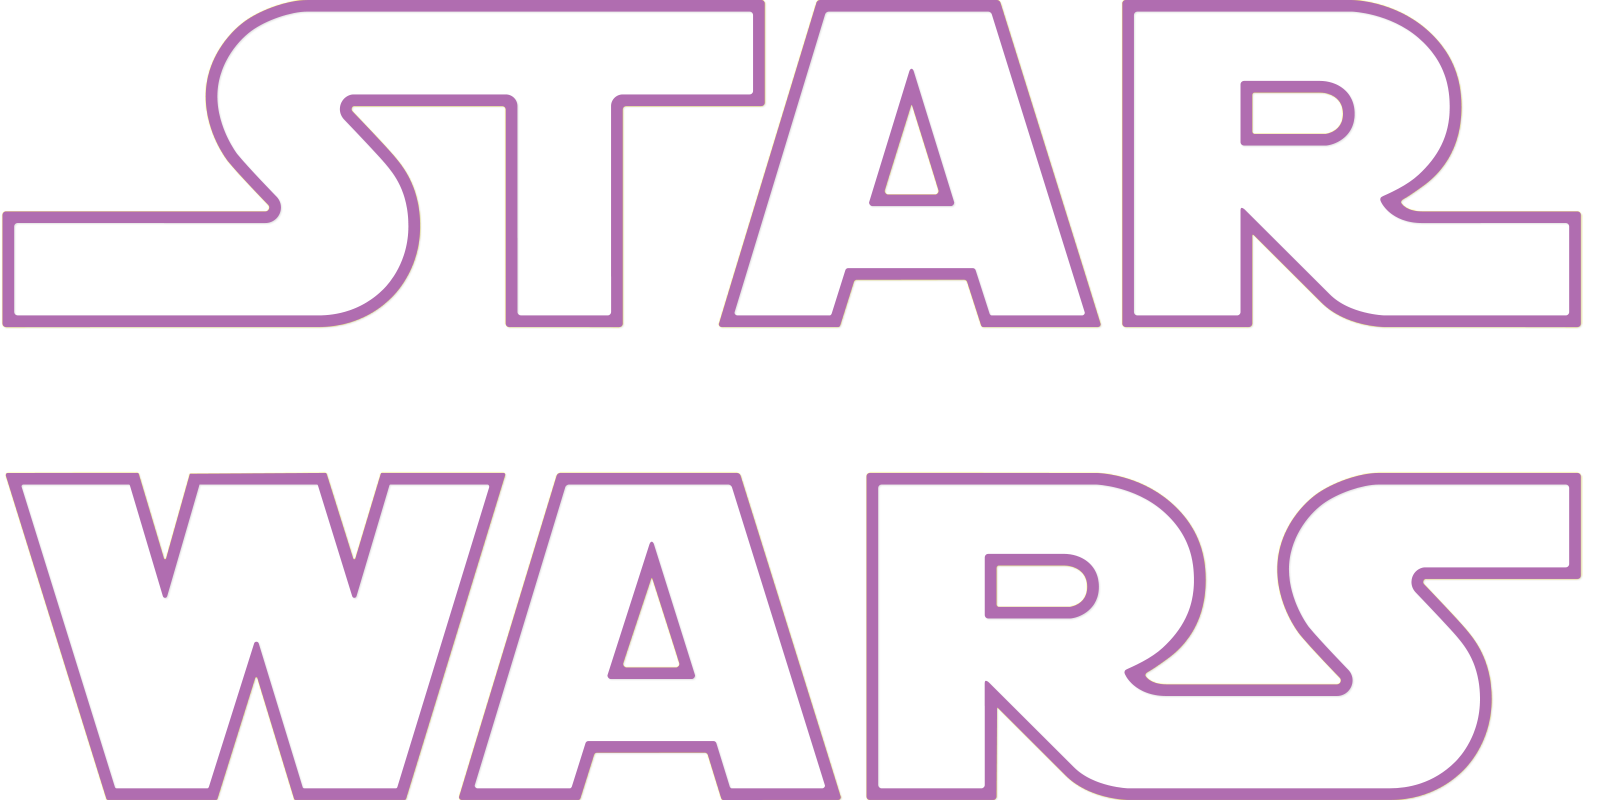 a new hope star wars 1977 full movie megashare